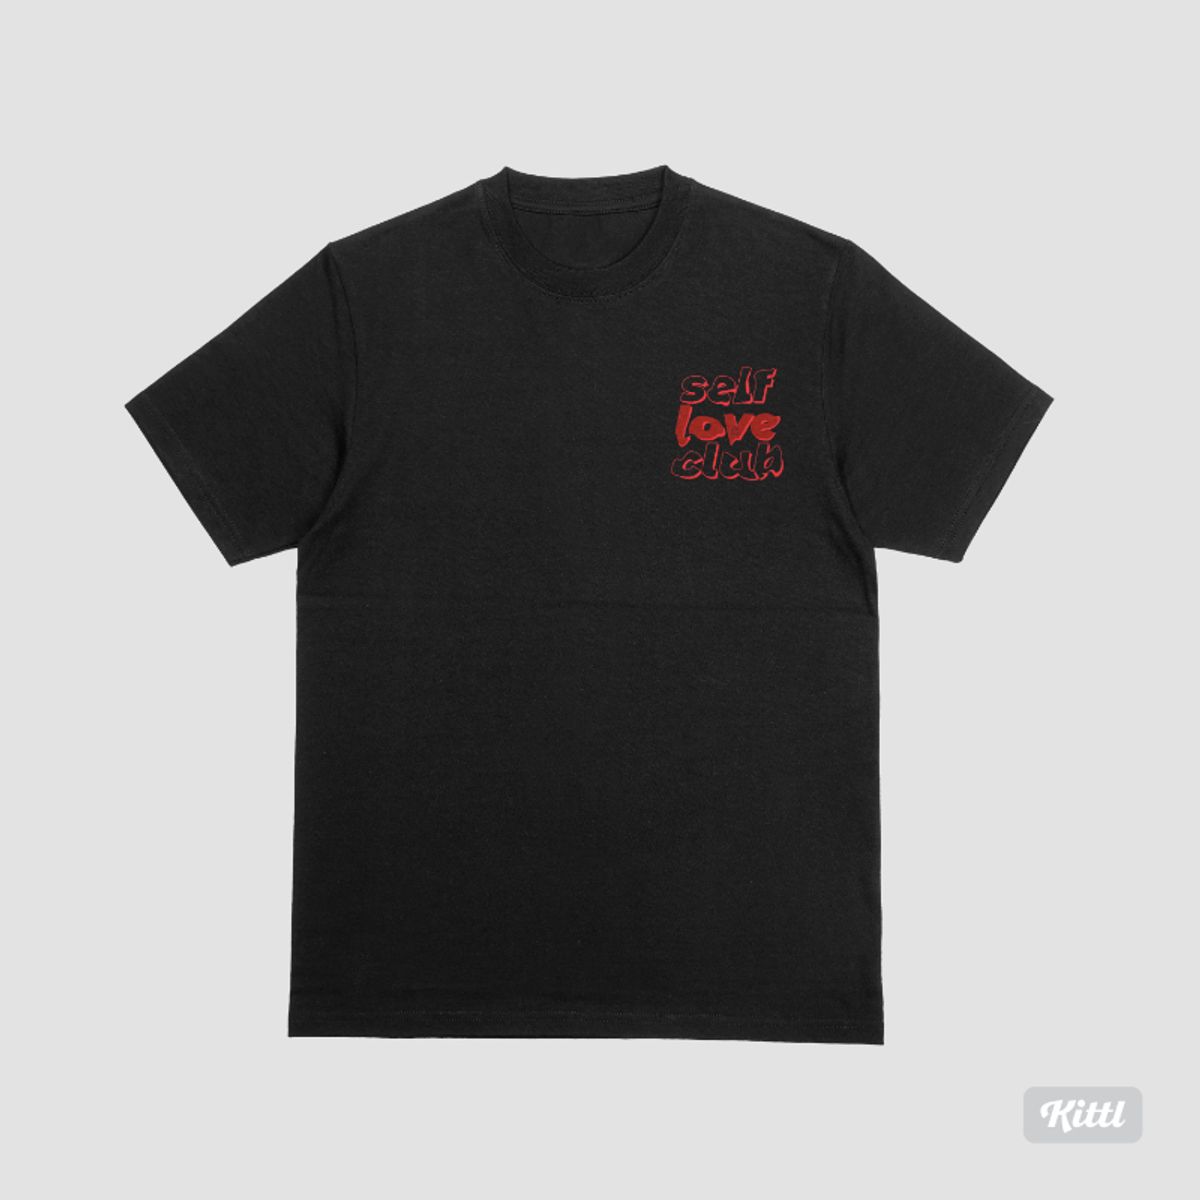 Nome do produto: Camiseta street - Self love club - Masculino